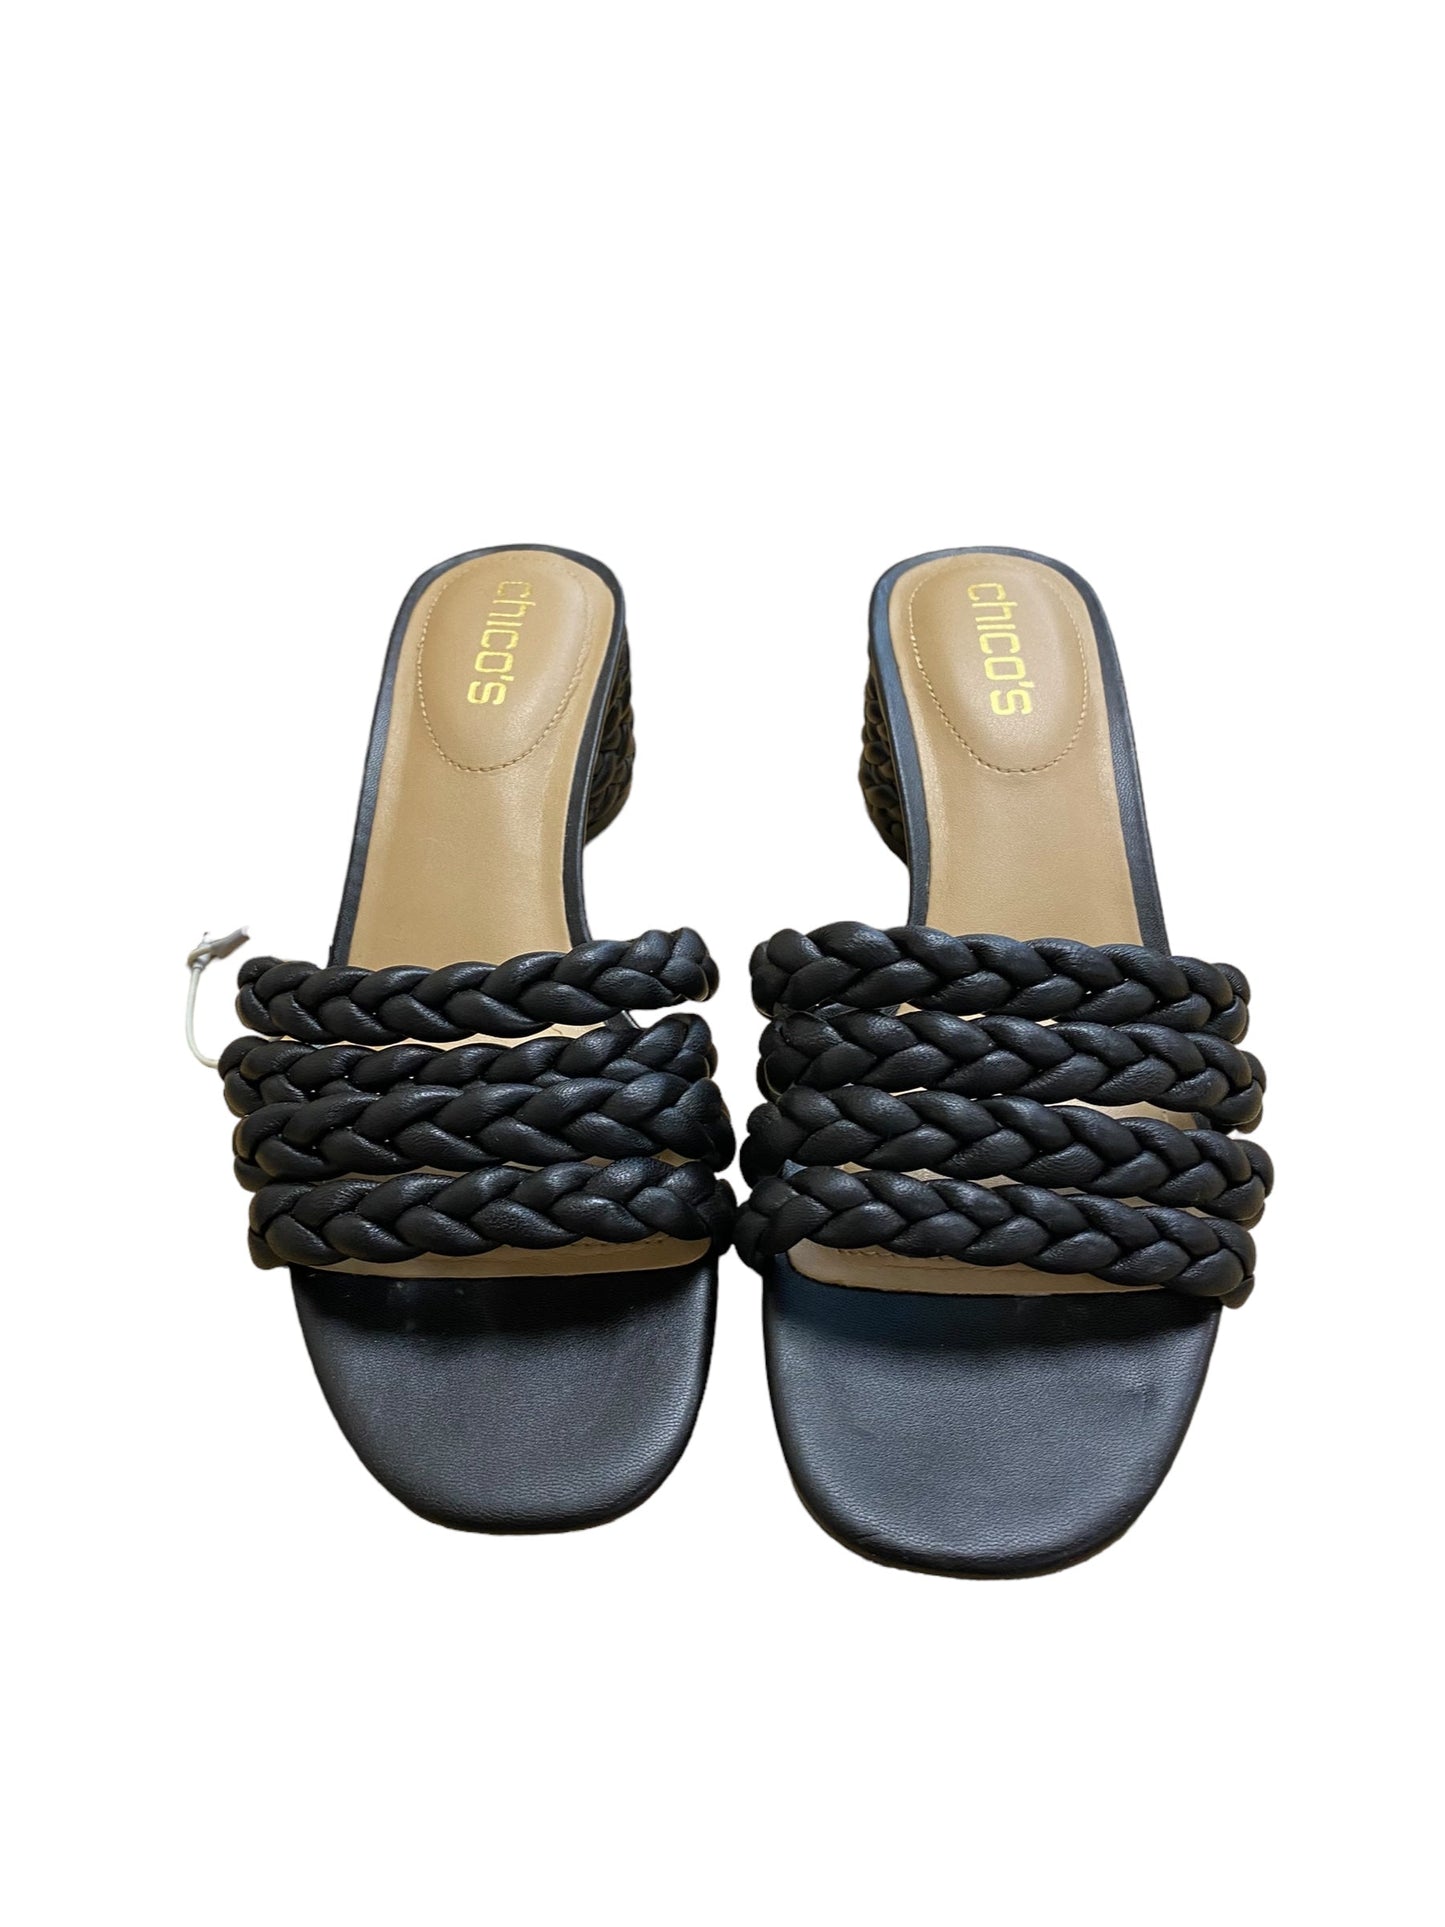 Black Shoes Heels Block Chicos, Size 7.5